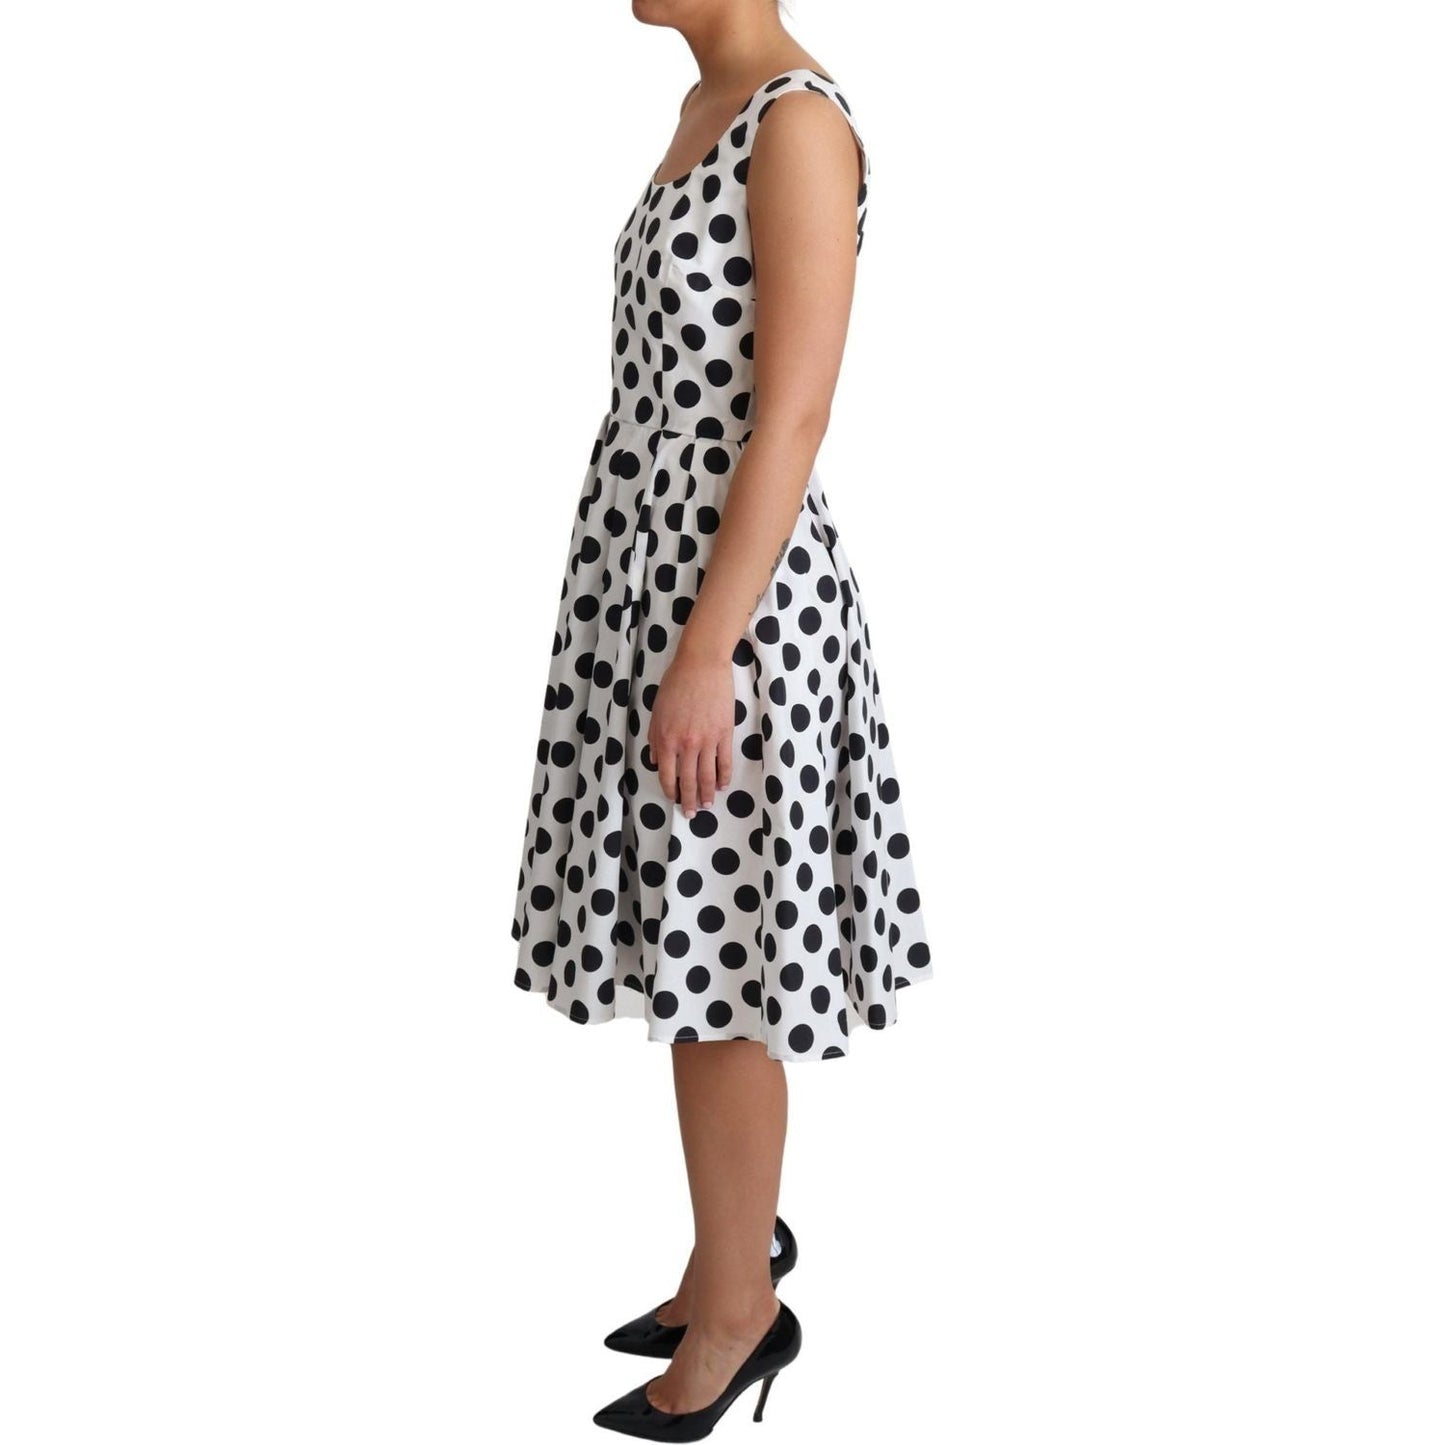 Dolce & Gabbana Elegant Polka Dot Sleeveless A-Line Dress white-polka-dotted-cotton-a-line-dress